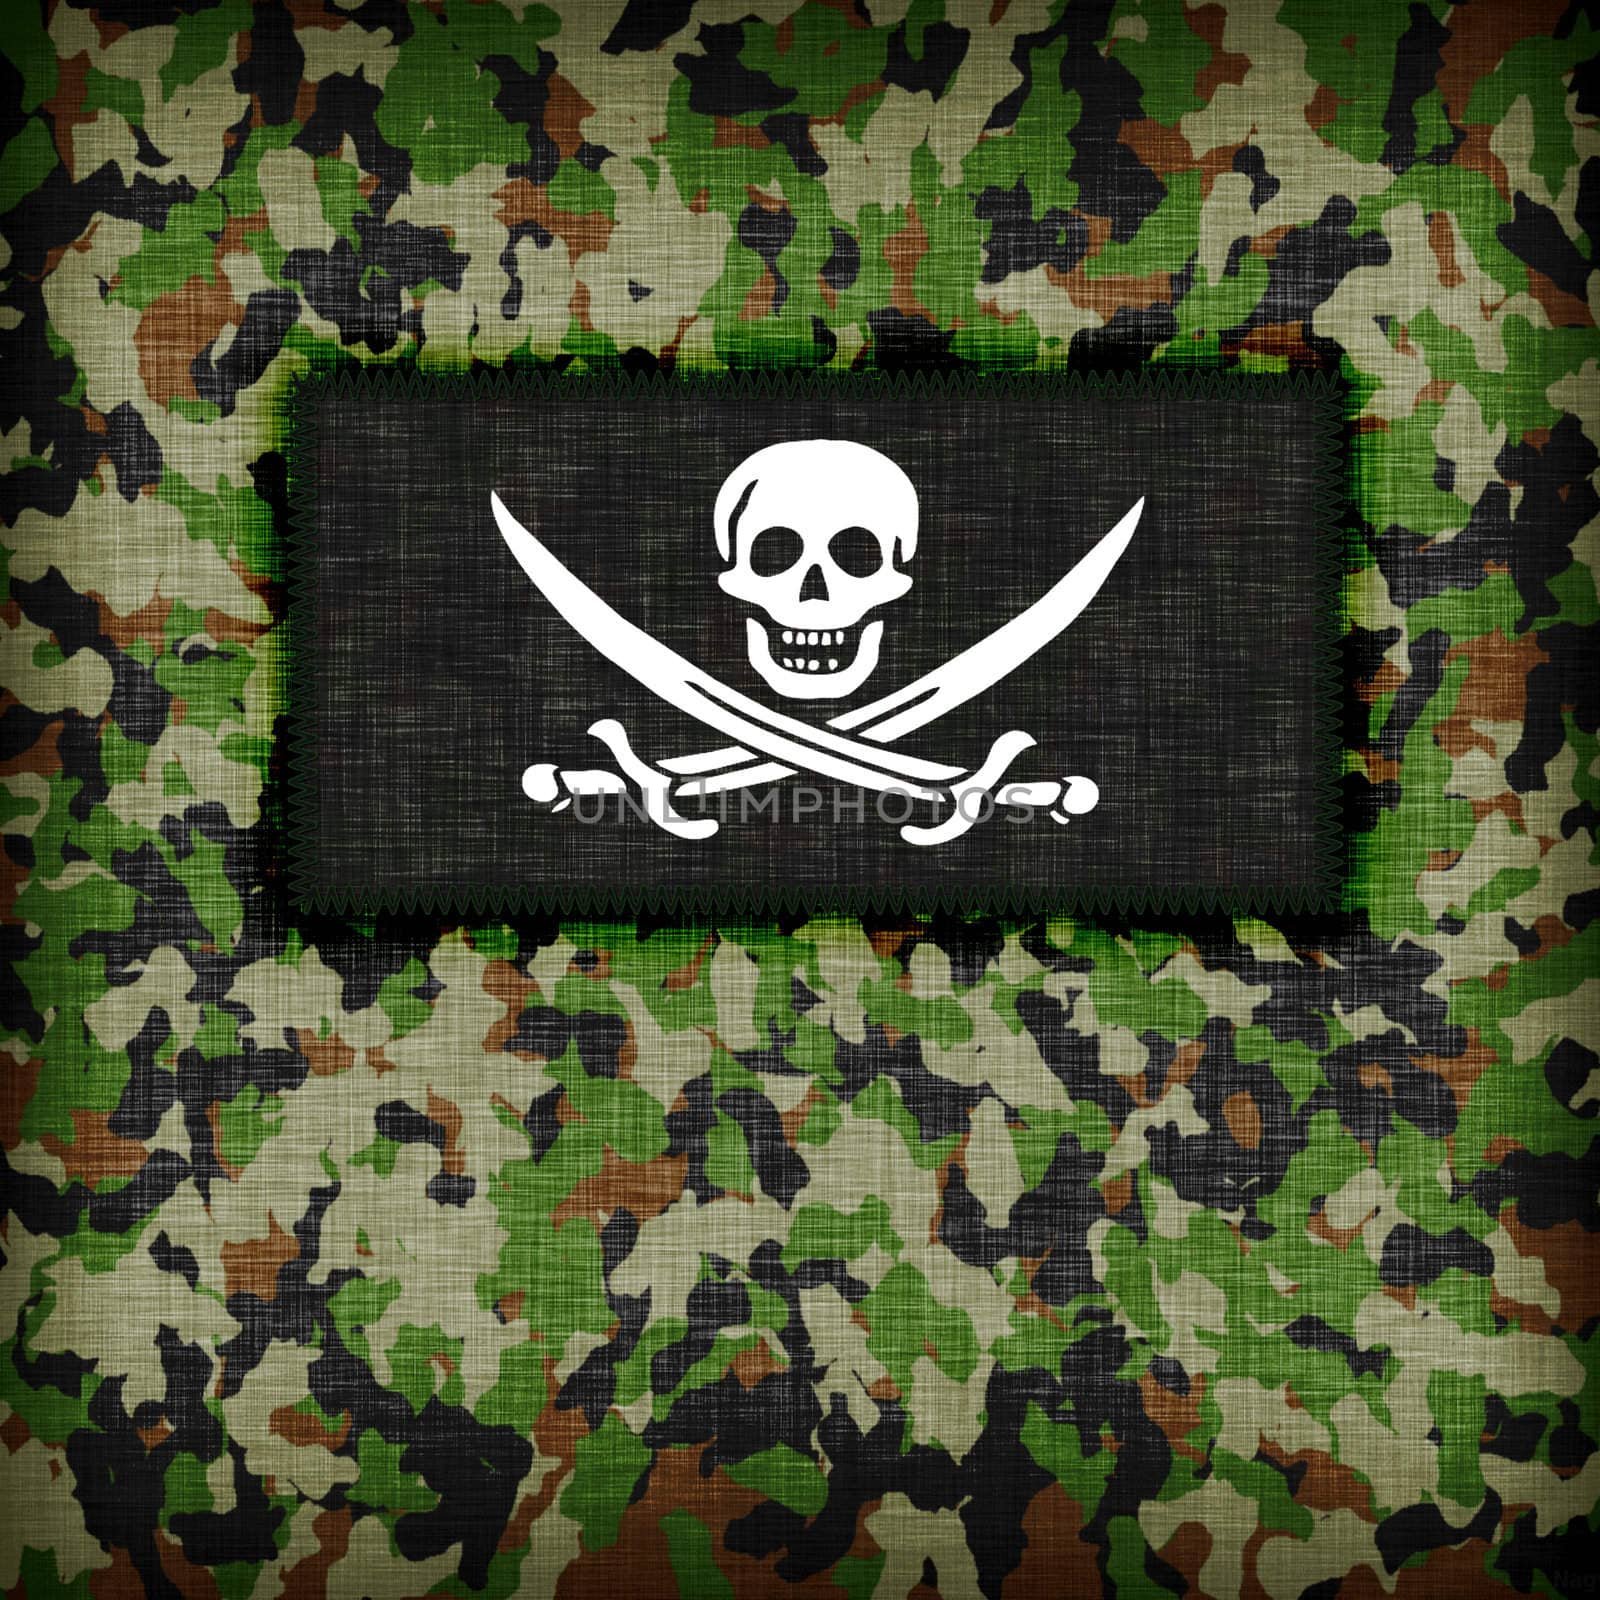 Amy camouflage uniform, Pirate by michaklootwijk